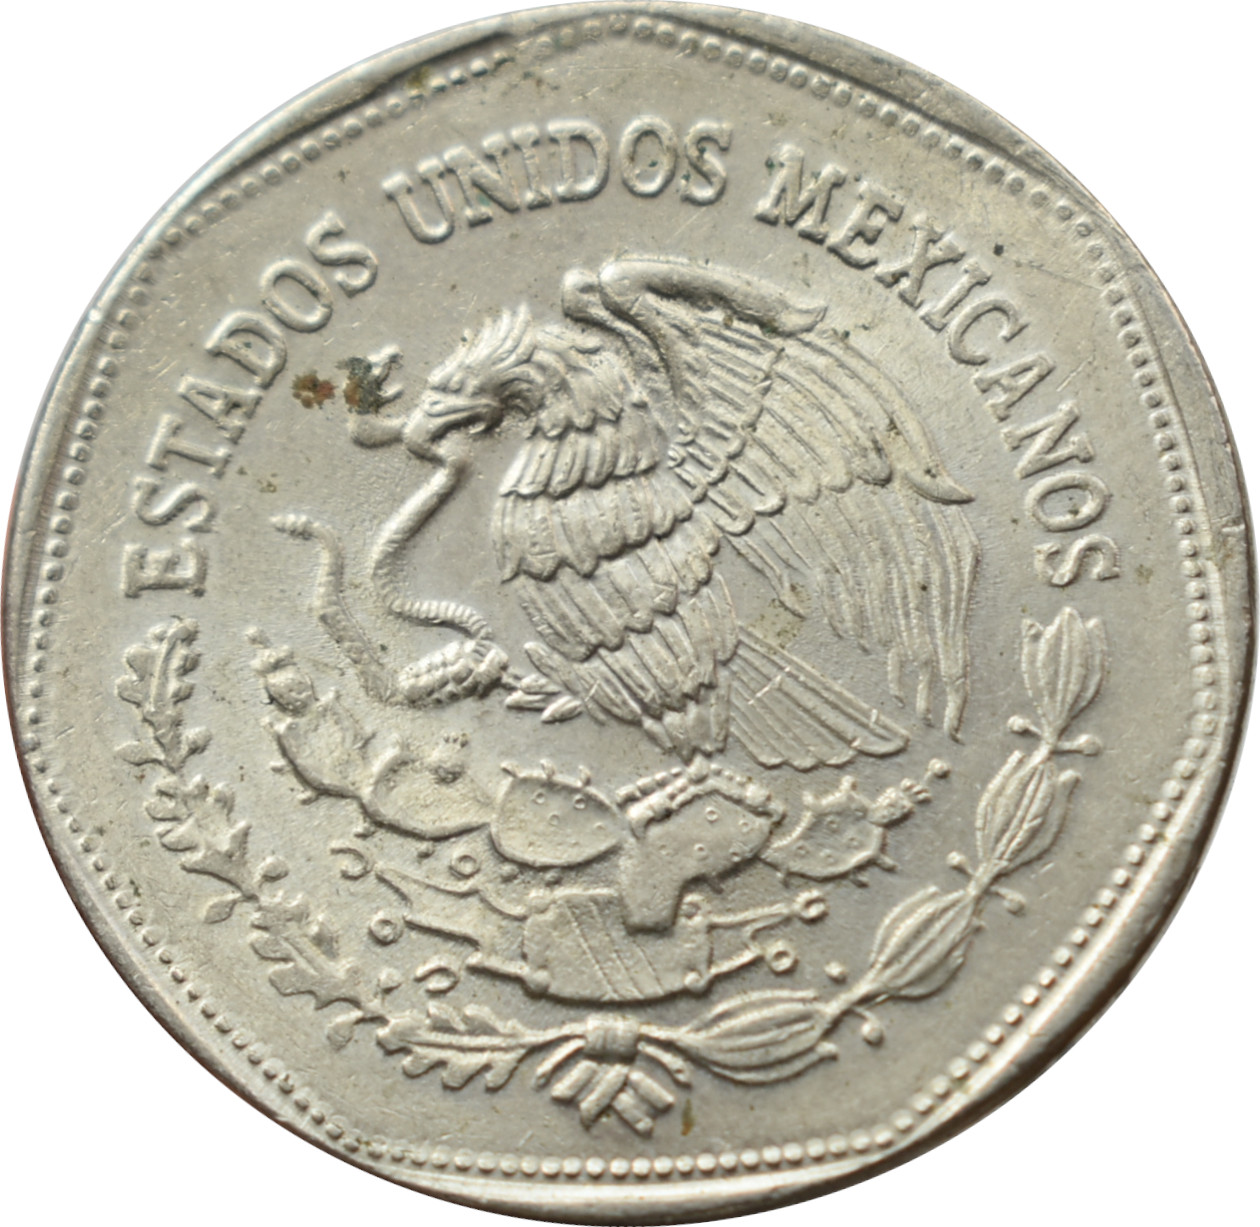 Mexiko 5 Pesos 1980